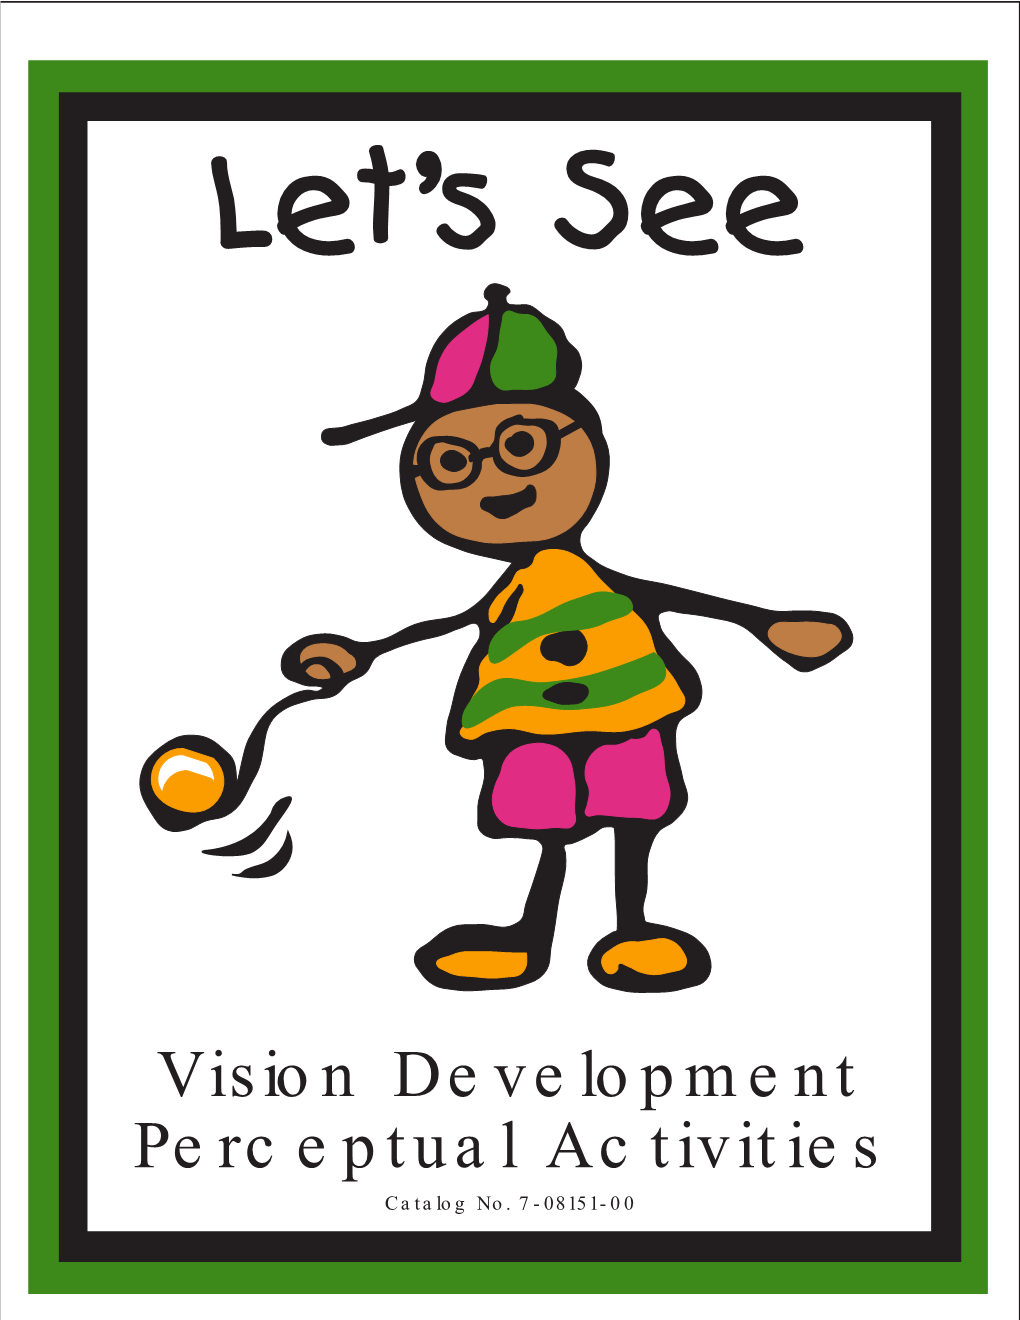 Vision Development Perceptual Activities